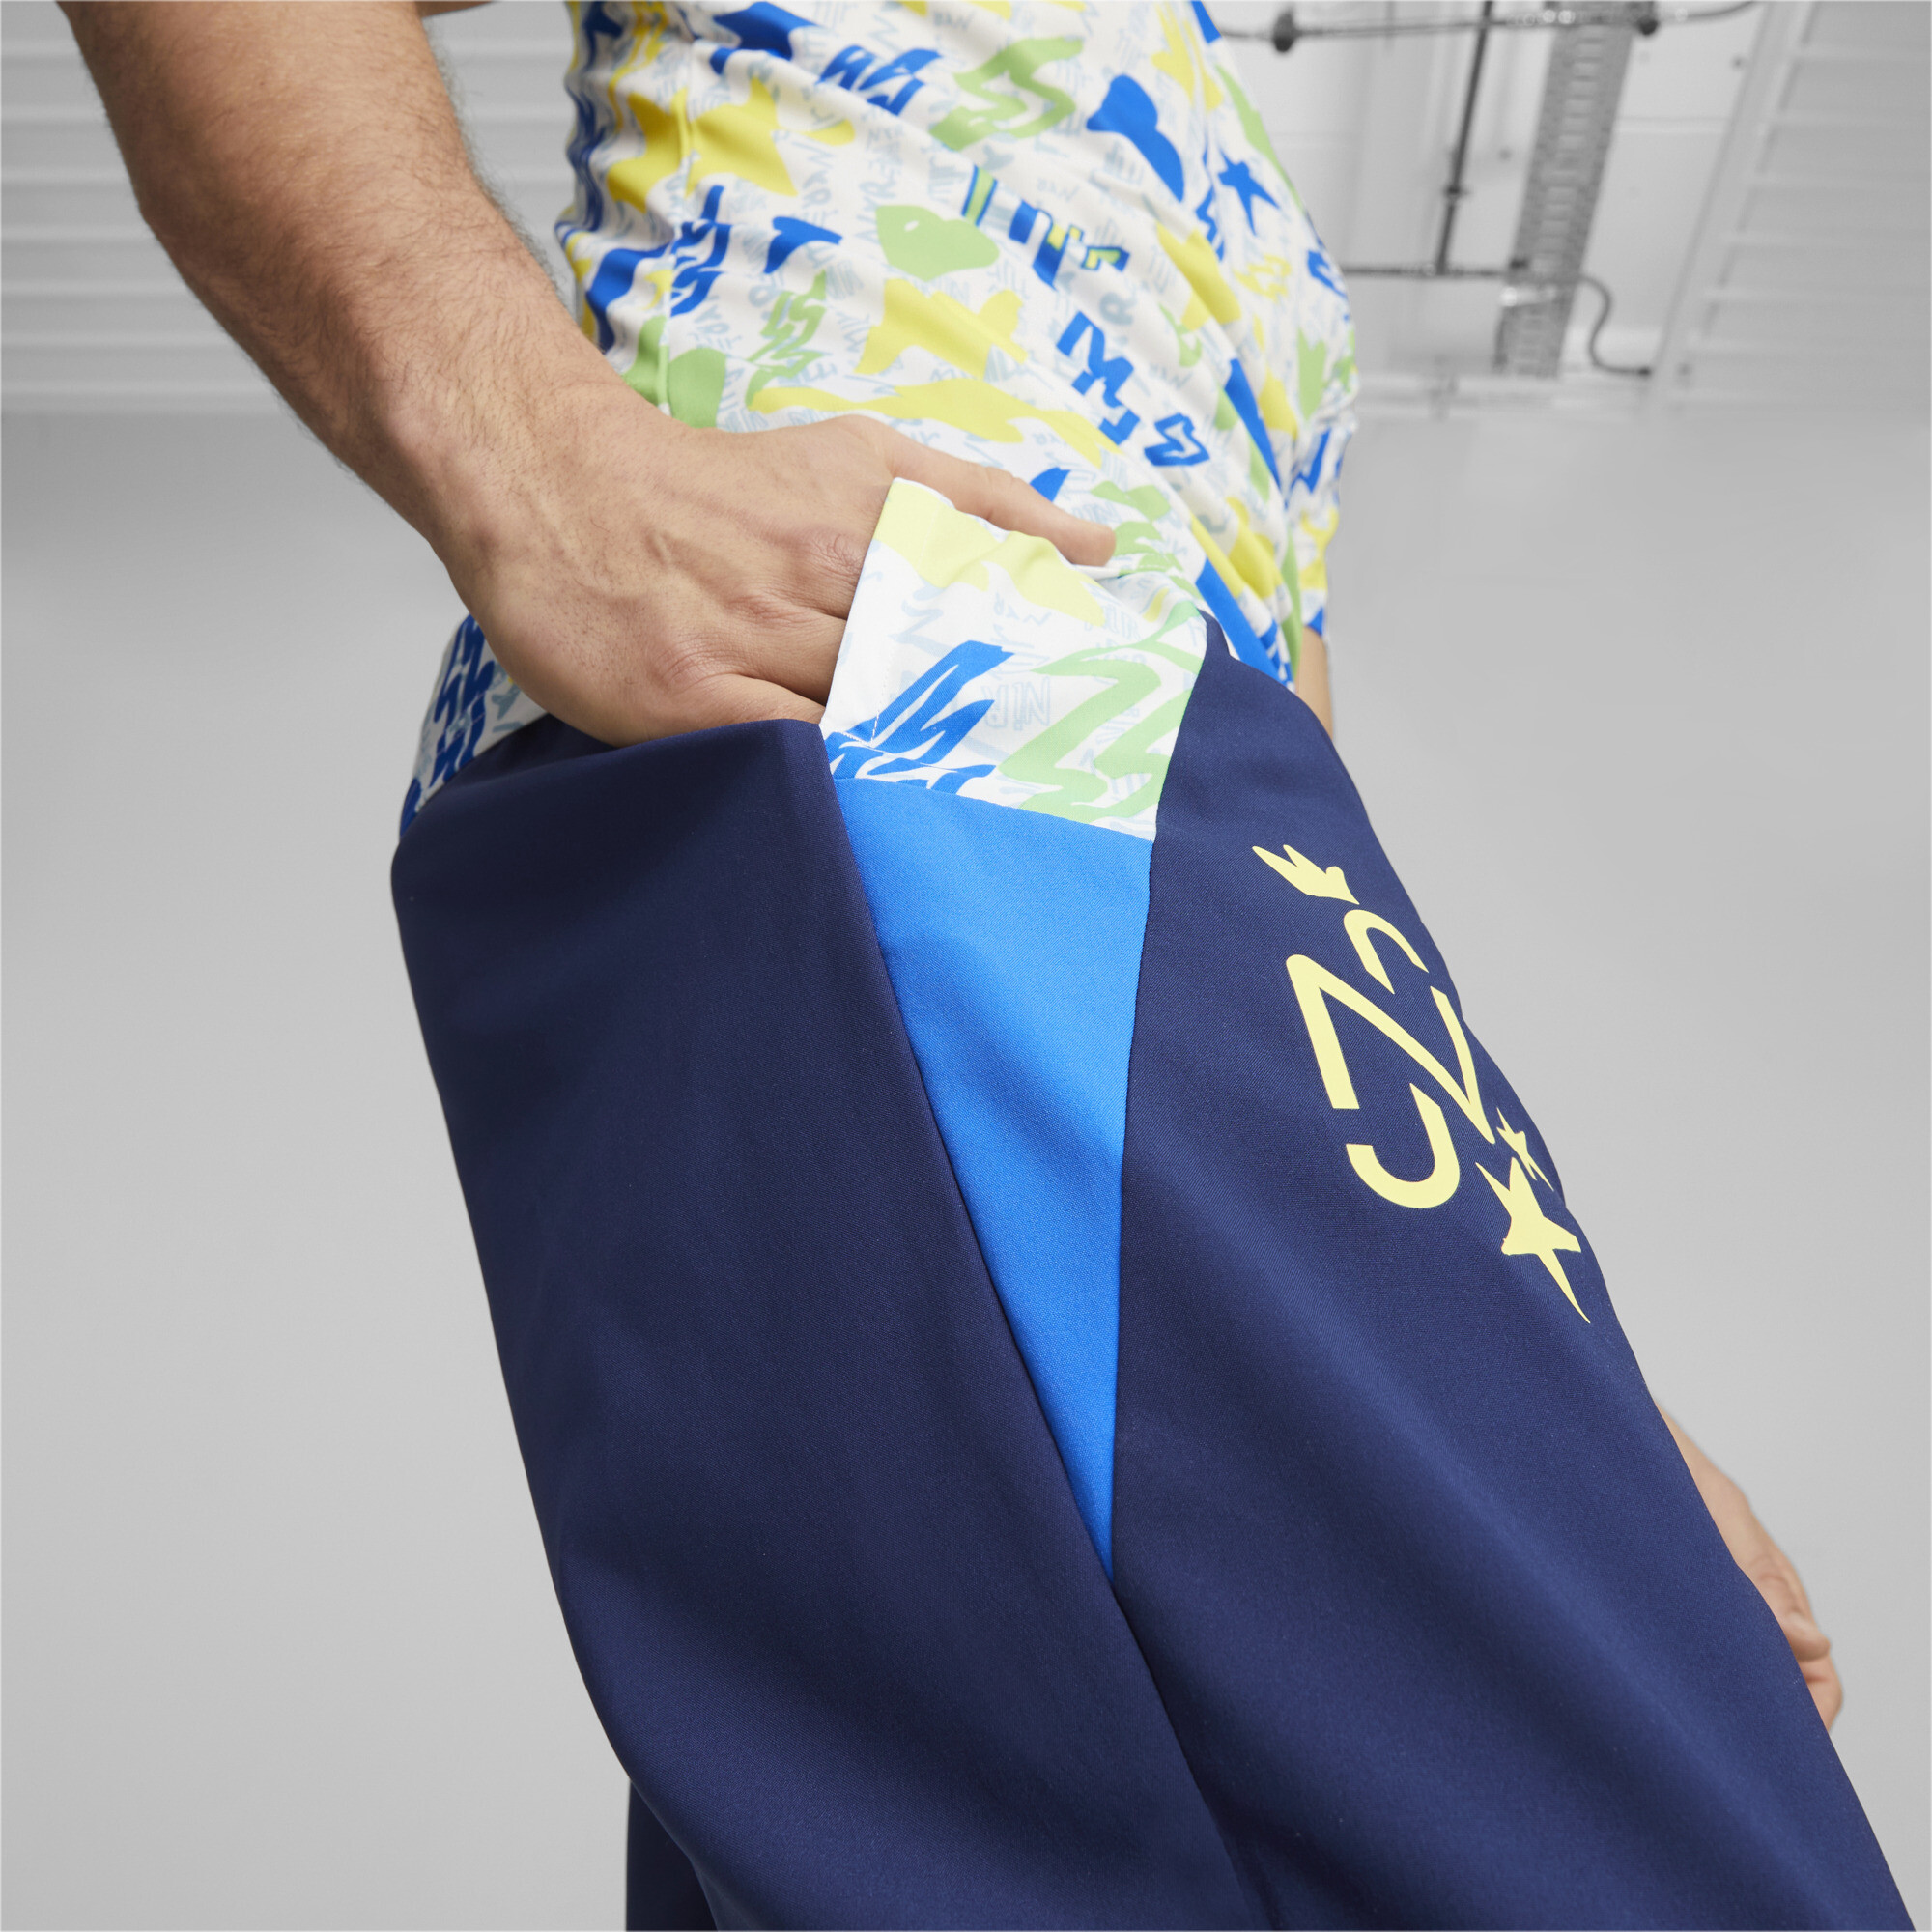 Men's PUMA Neymar Jr Football Pants In Blue, Size Medium